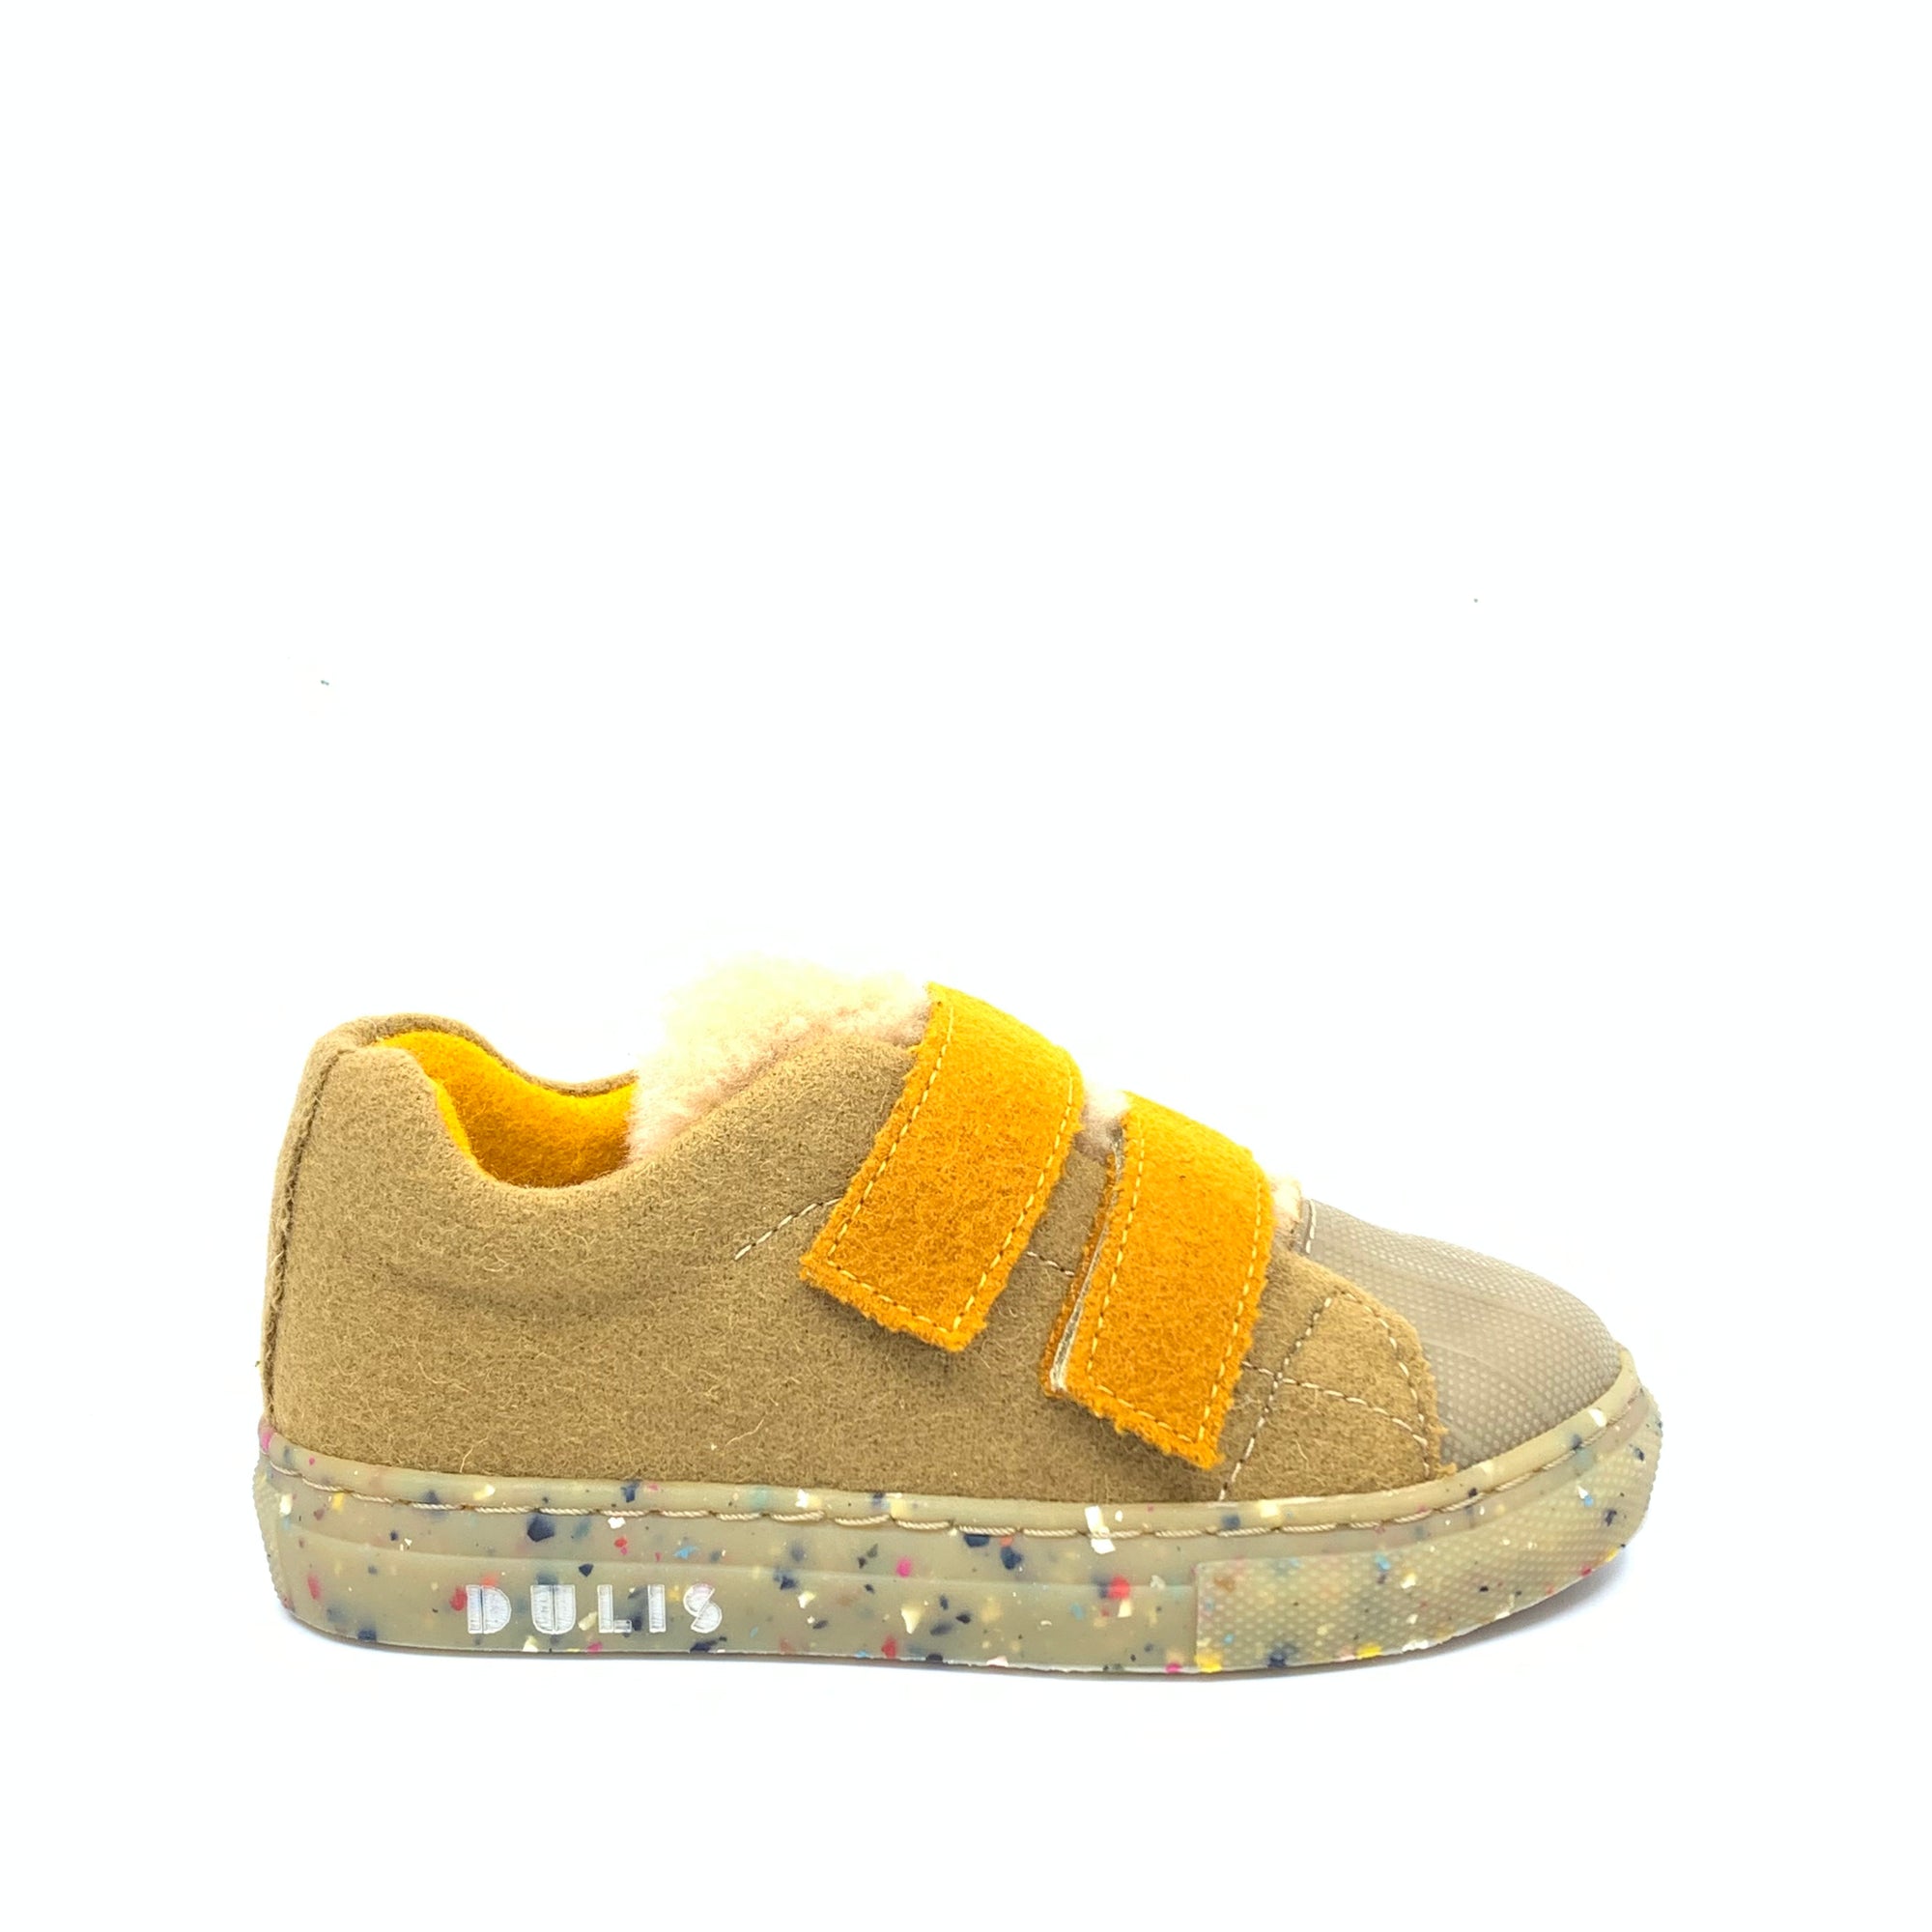 Dulis Beige Speckled Sneaker-Tassel Children Shoes